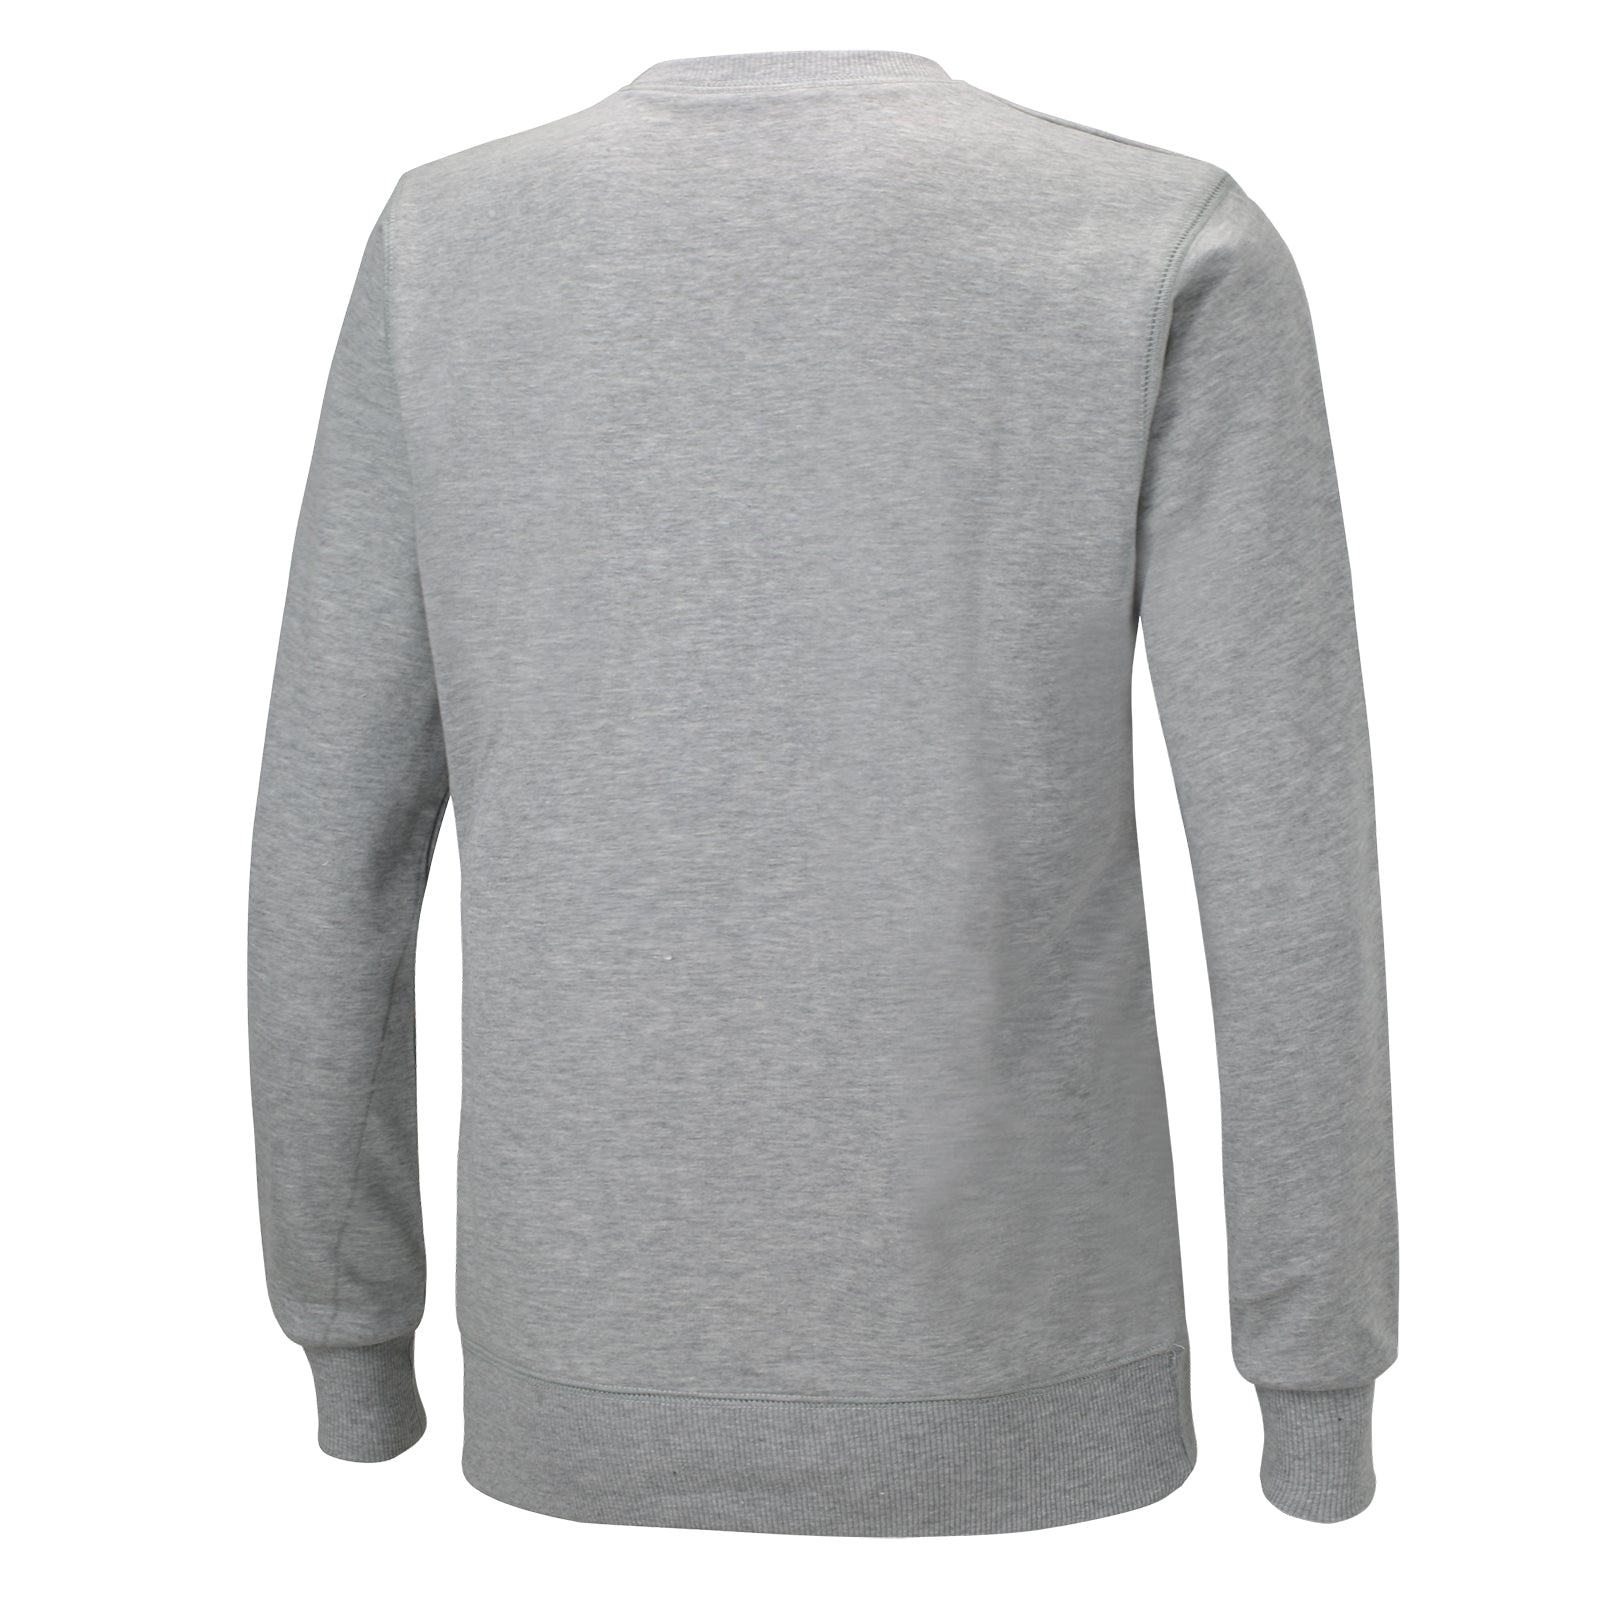 Sweatshirt-ohne-kapuze-winter-thermo-pro-hoodie-sweater-s-m-l-xl-xxl-melange-logo-print-back